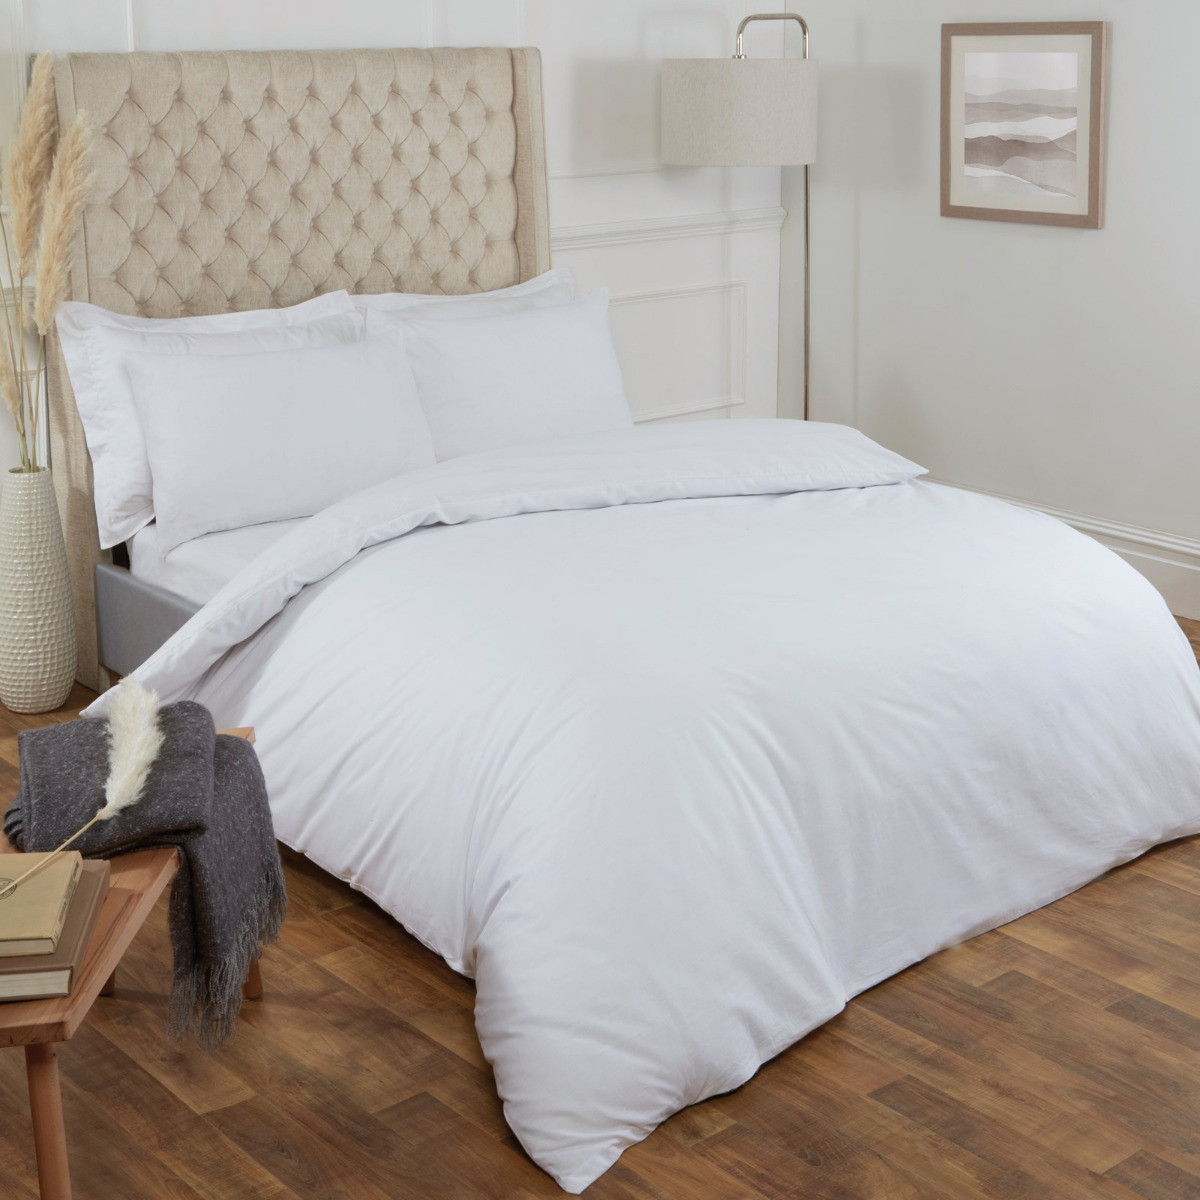 Highams Plain 100% Cotton Duvet Cover with Pillow Case Bedding Set, White - Single>